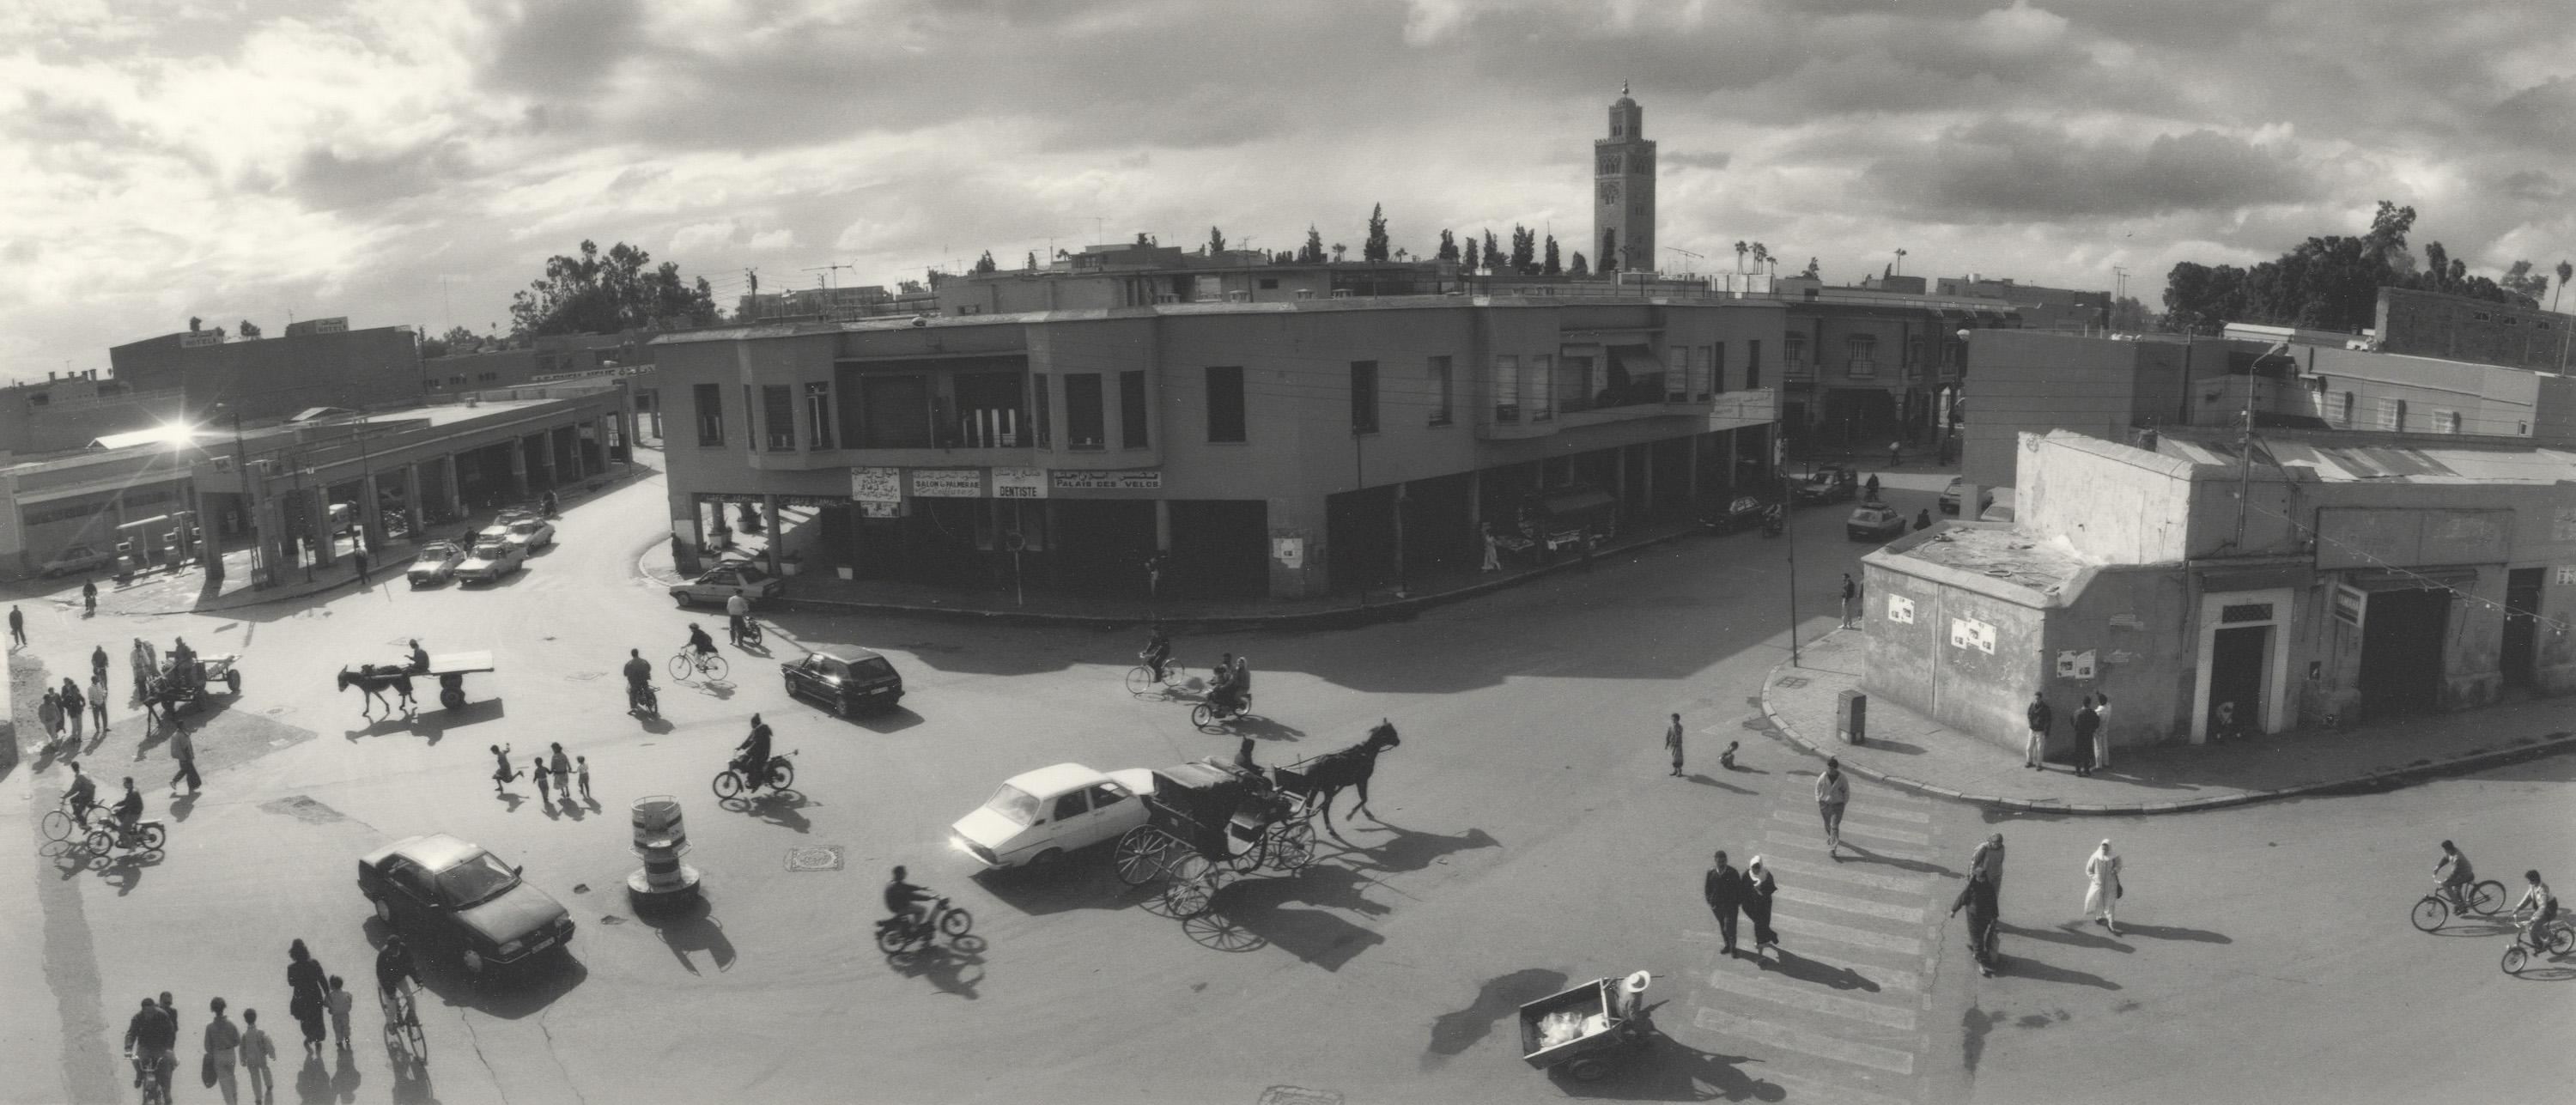 Pentti Sammallahti Black and White Photograph - Marrakech, Morocco (City intersection)